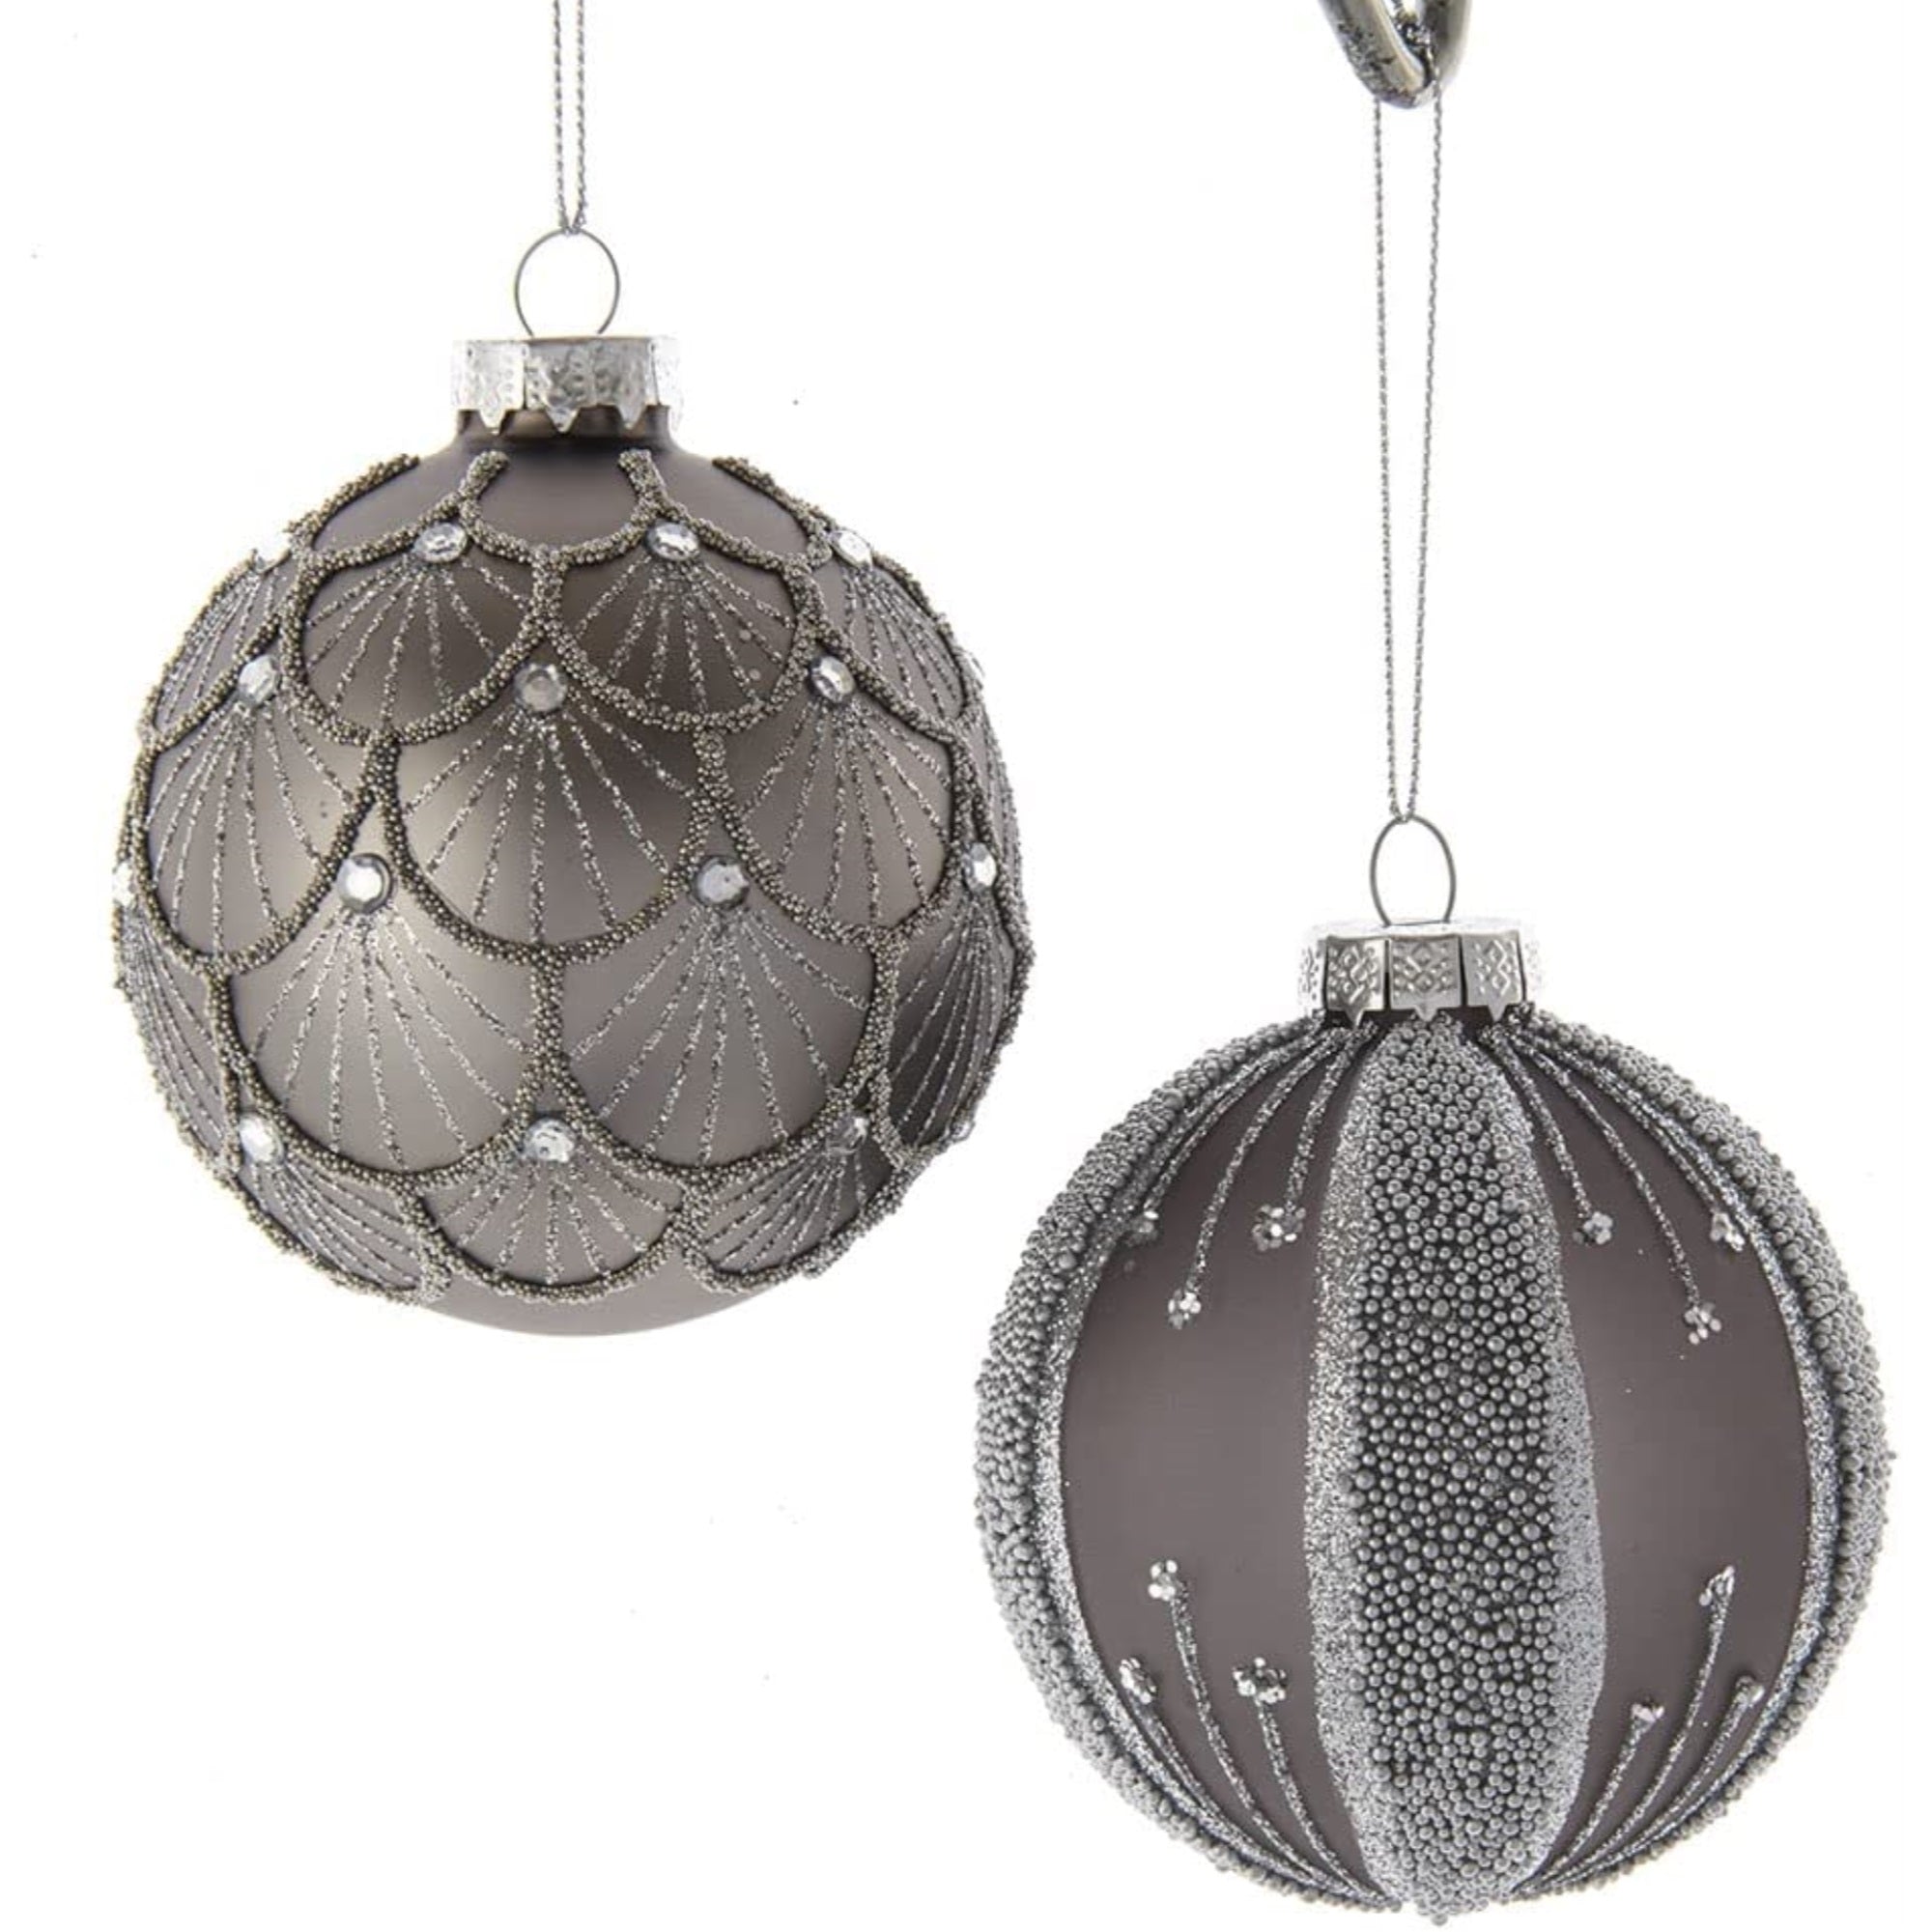 Kurt Adler Ornaments For Christmas Tree, Silver/Black Jeweled Glass Balls, 6 Piece Box Set, 3"